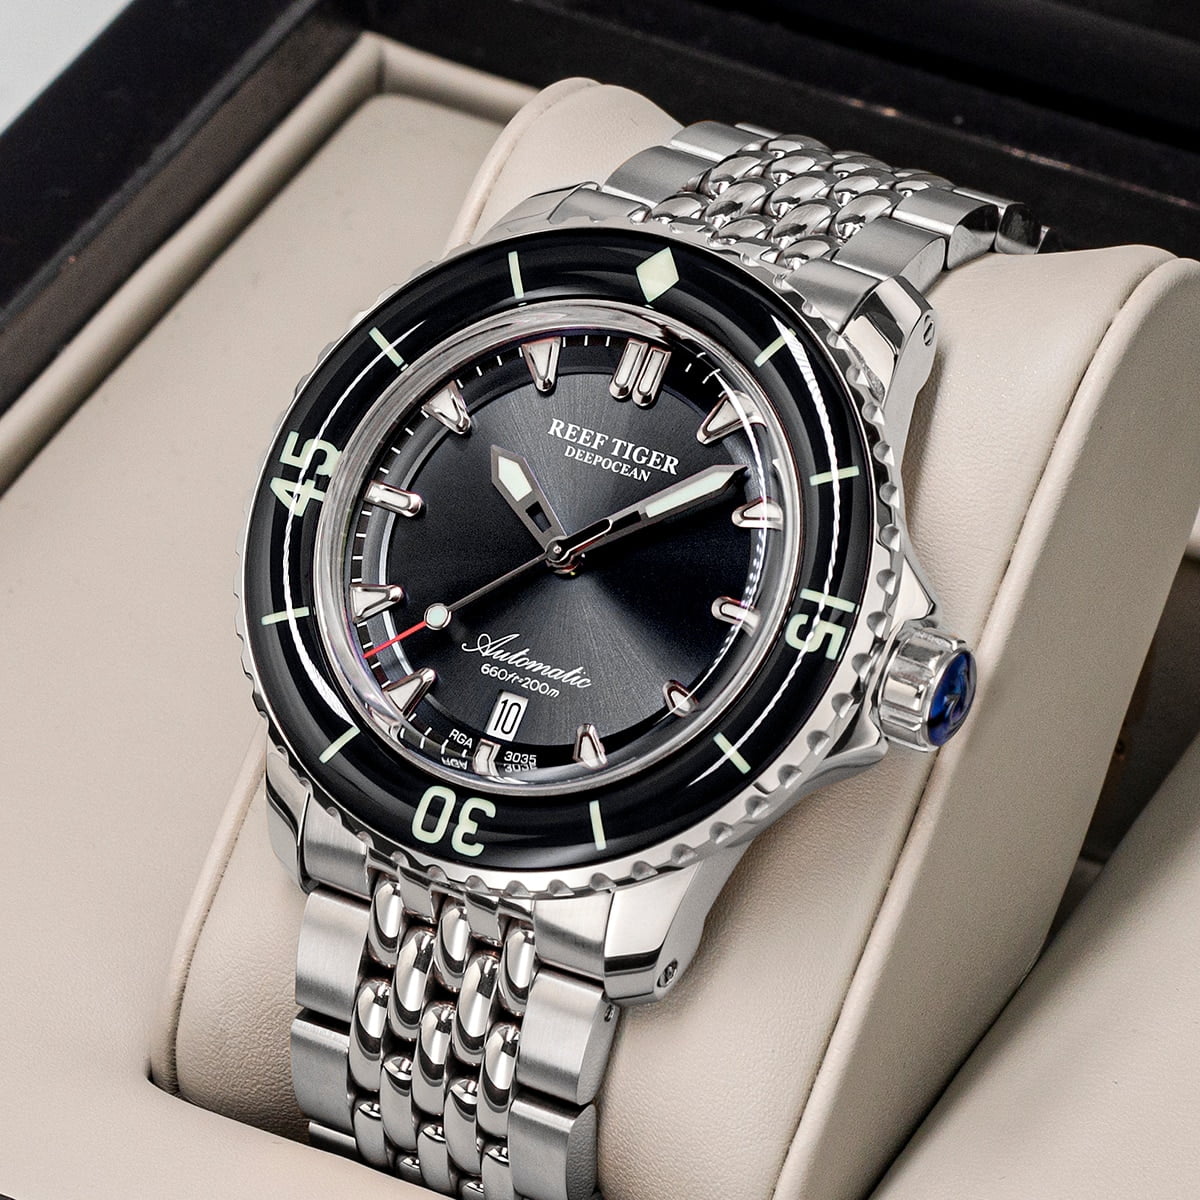 Reef Tiger RT Top Brand Men Mechanical Steel Dive Watches Sapphire Crystal Bracelet Watches Luminous Watch